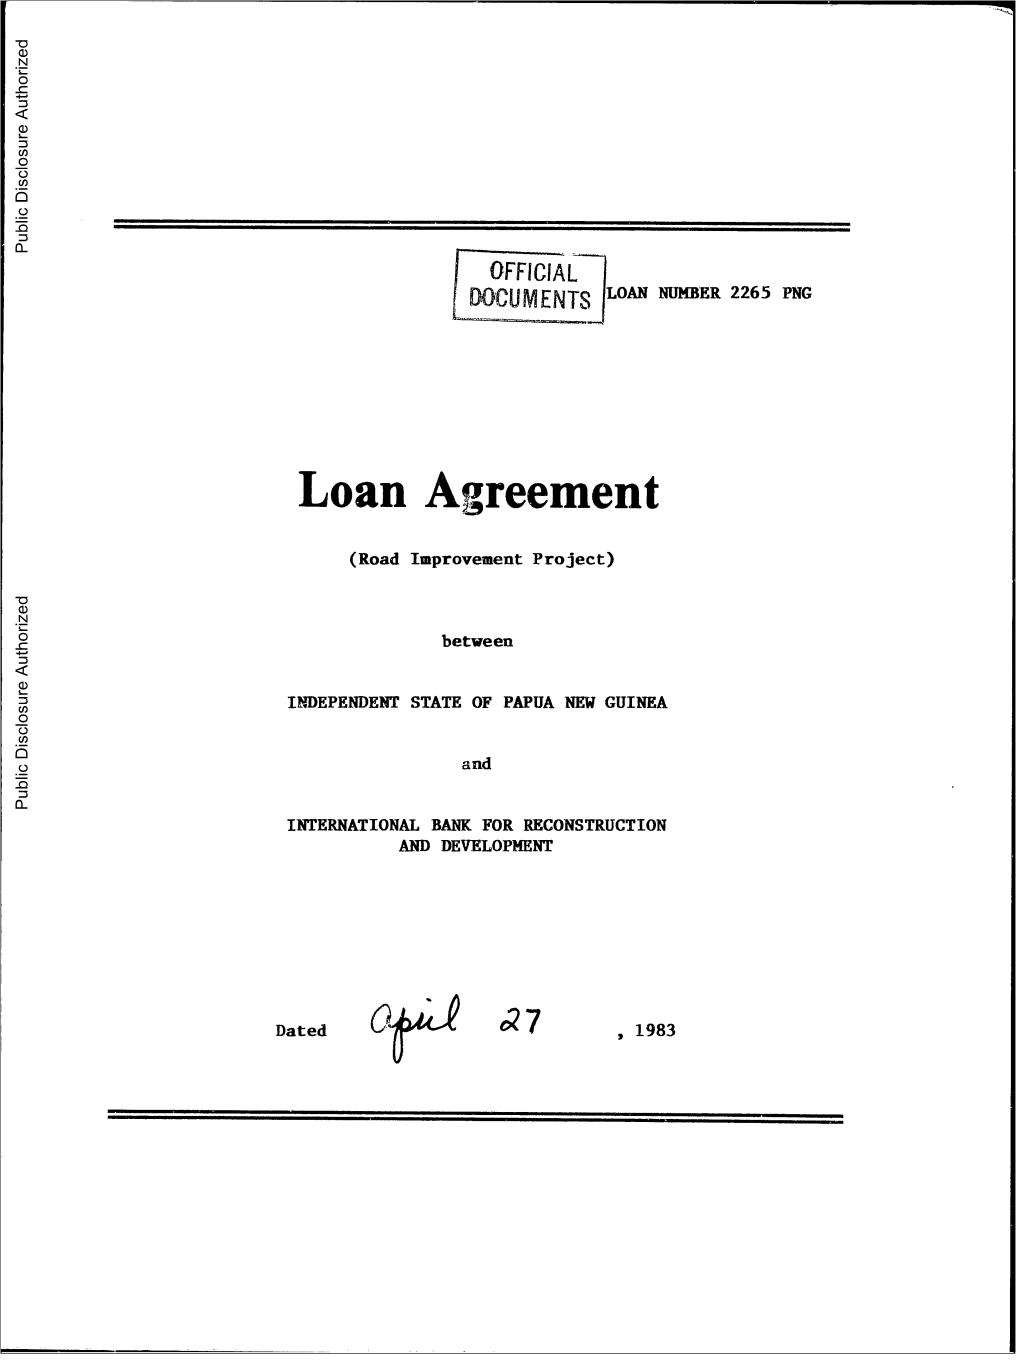 Loan Agreement Public Disclosure Authorized (Road Improvement Project)